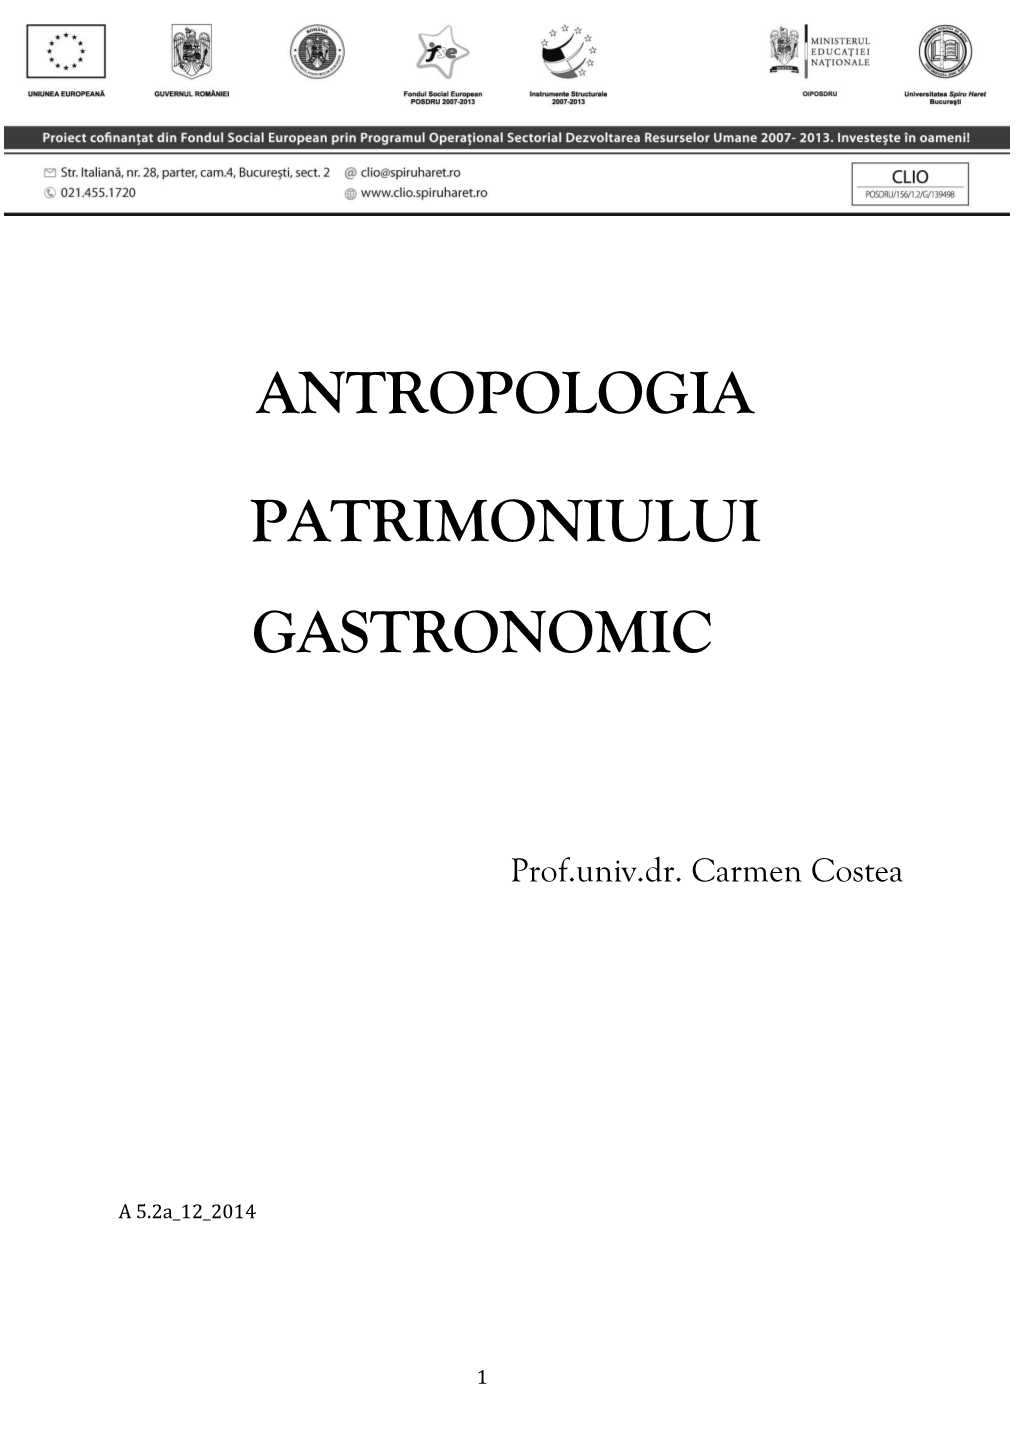 Antropologia Patrimoniului Gastronomic